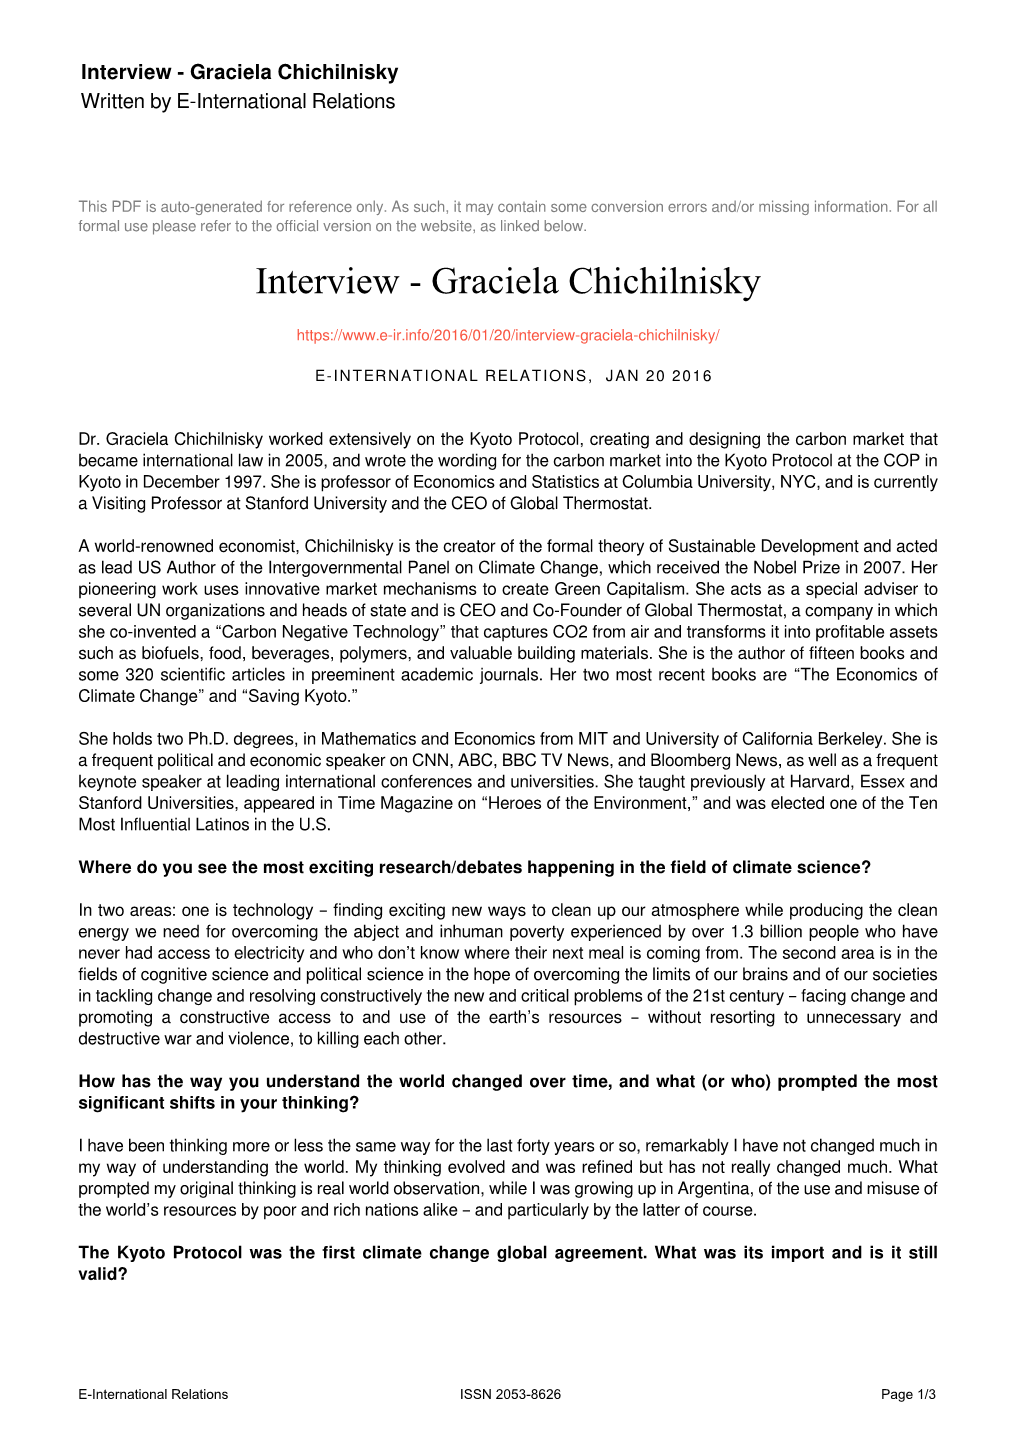 Interview - Graciela Chichilnisky Written by E-International Relations